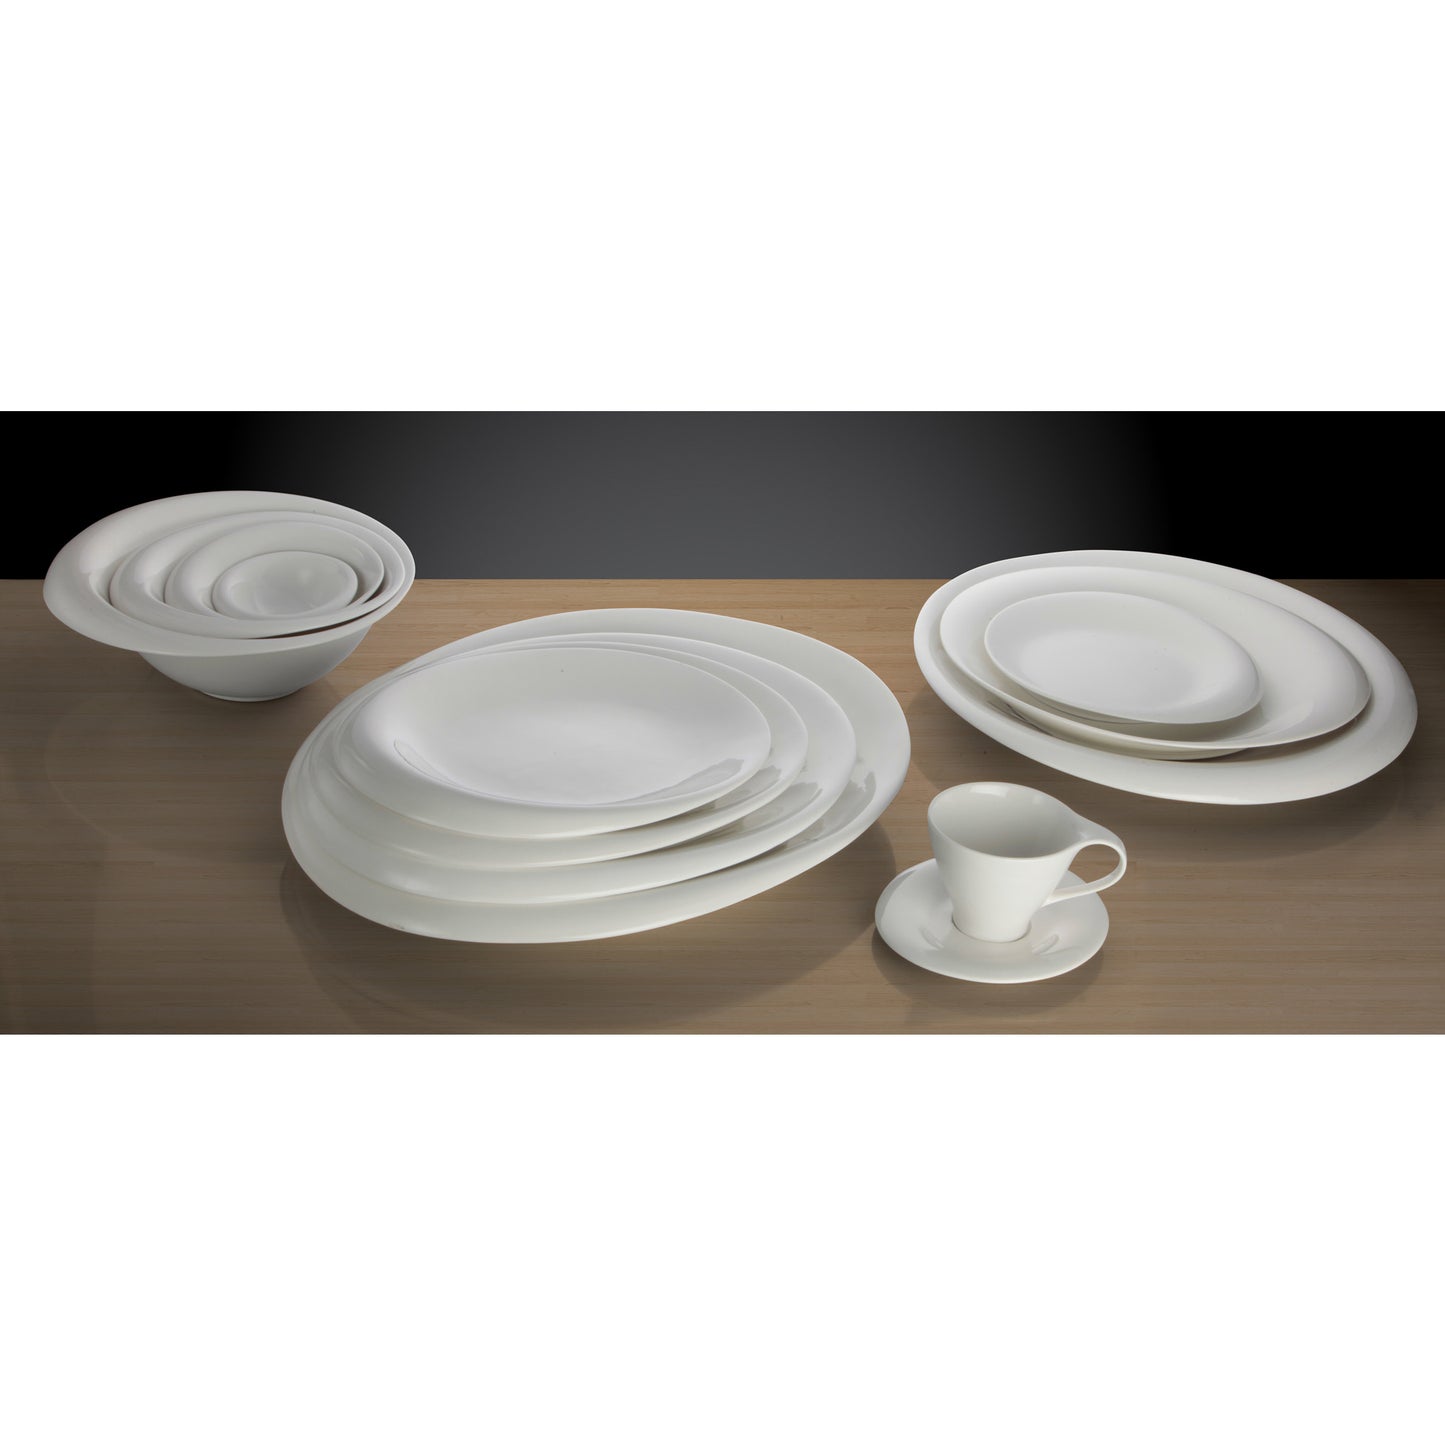 WDP004-206 - 6"Dia. Porcelain Round Bowl, Creamy White, 24 pcs/case